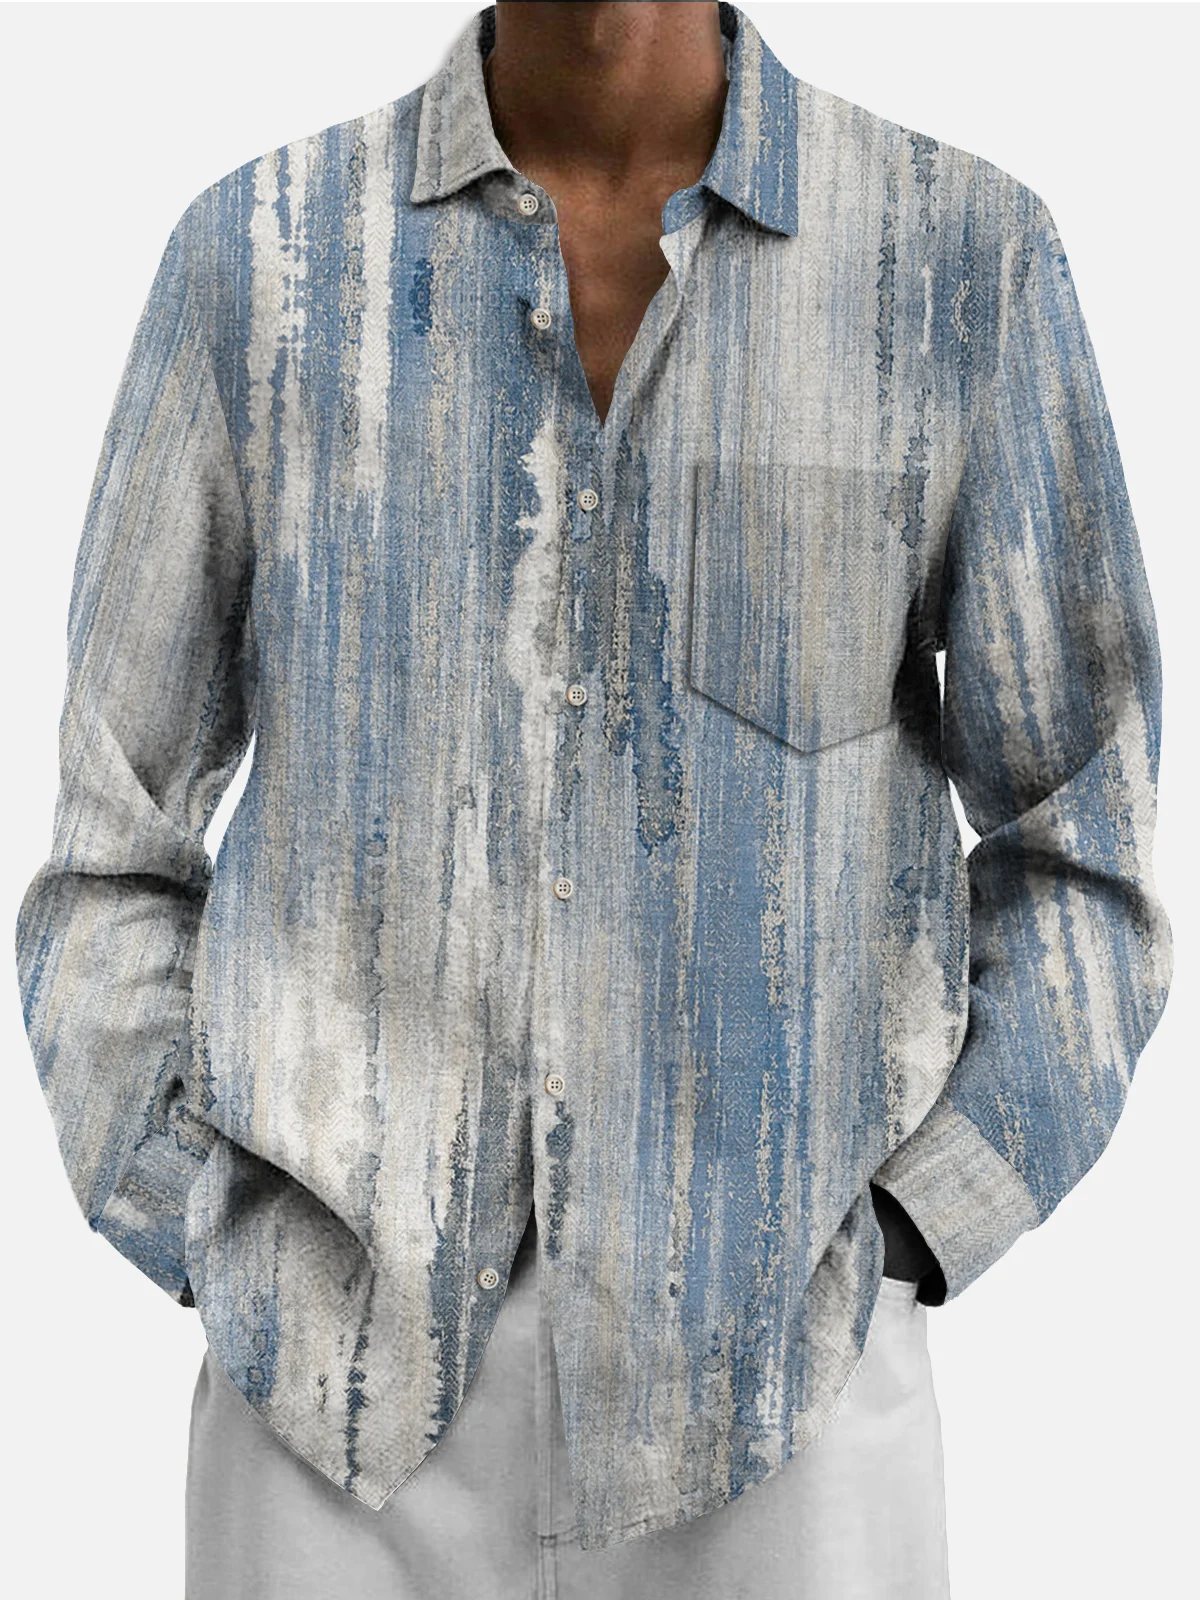 Royaura 50’s Vintage Textured Light Blue Men's Casual Long Sleeve Shirts Stretch Aloha Camp Pocket Wrinkle Free Seersucker Shirts